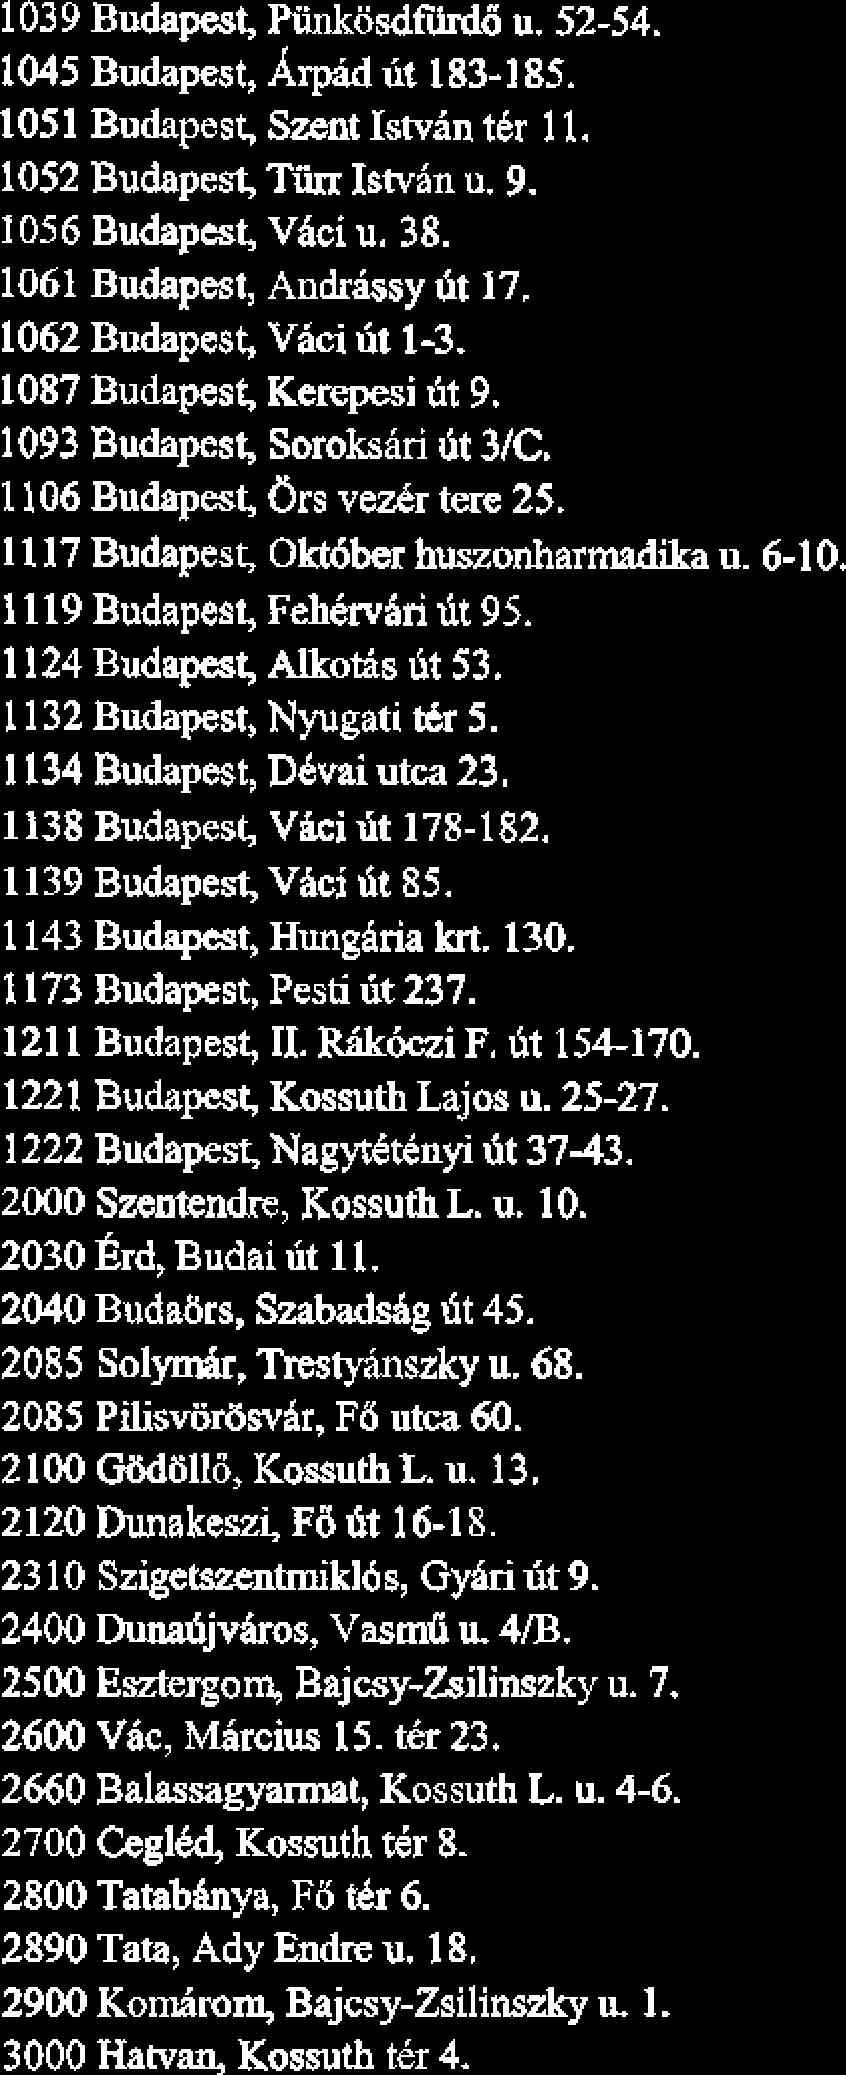 1039 Budapest, Fihkosdfi u. 52-54. 1045 Budapest, Arpid ut 183-185. 1051 Budapest, Szent Istvin t6r 11. 1052 Budapest, Tiin Ismin u. 9. 1056 Budapest, Vhci u. 38. 1061 Budapest, Andrbsy Q 17.